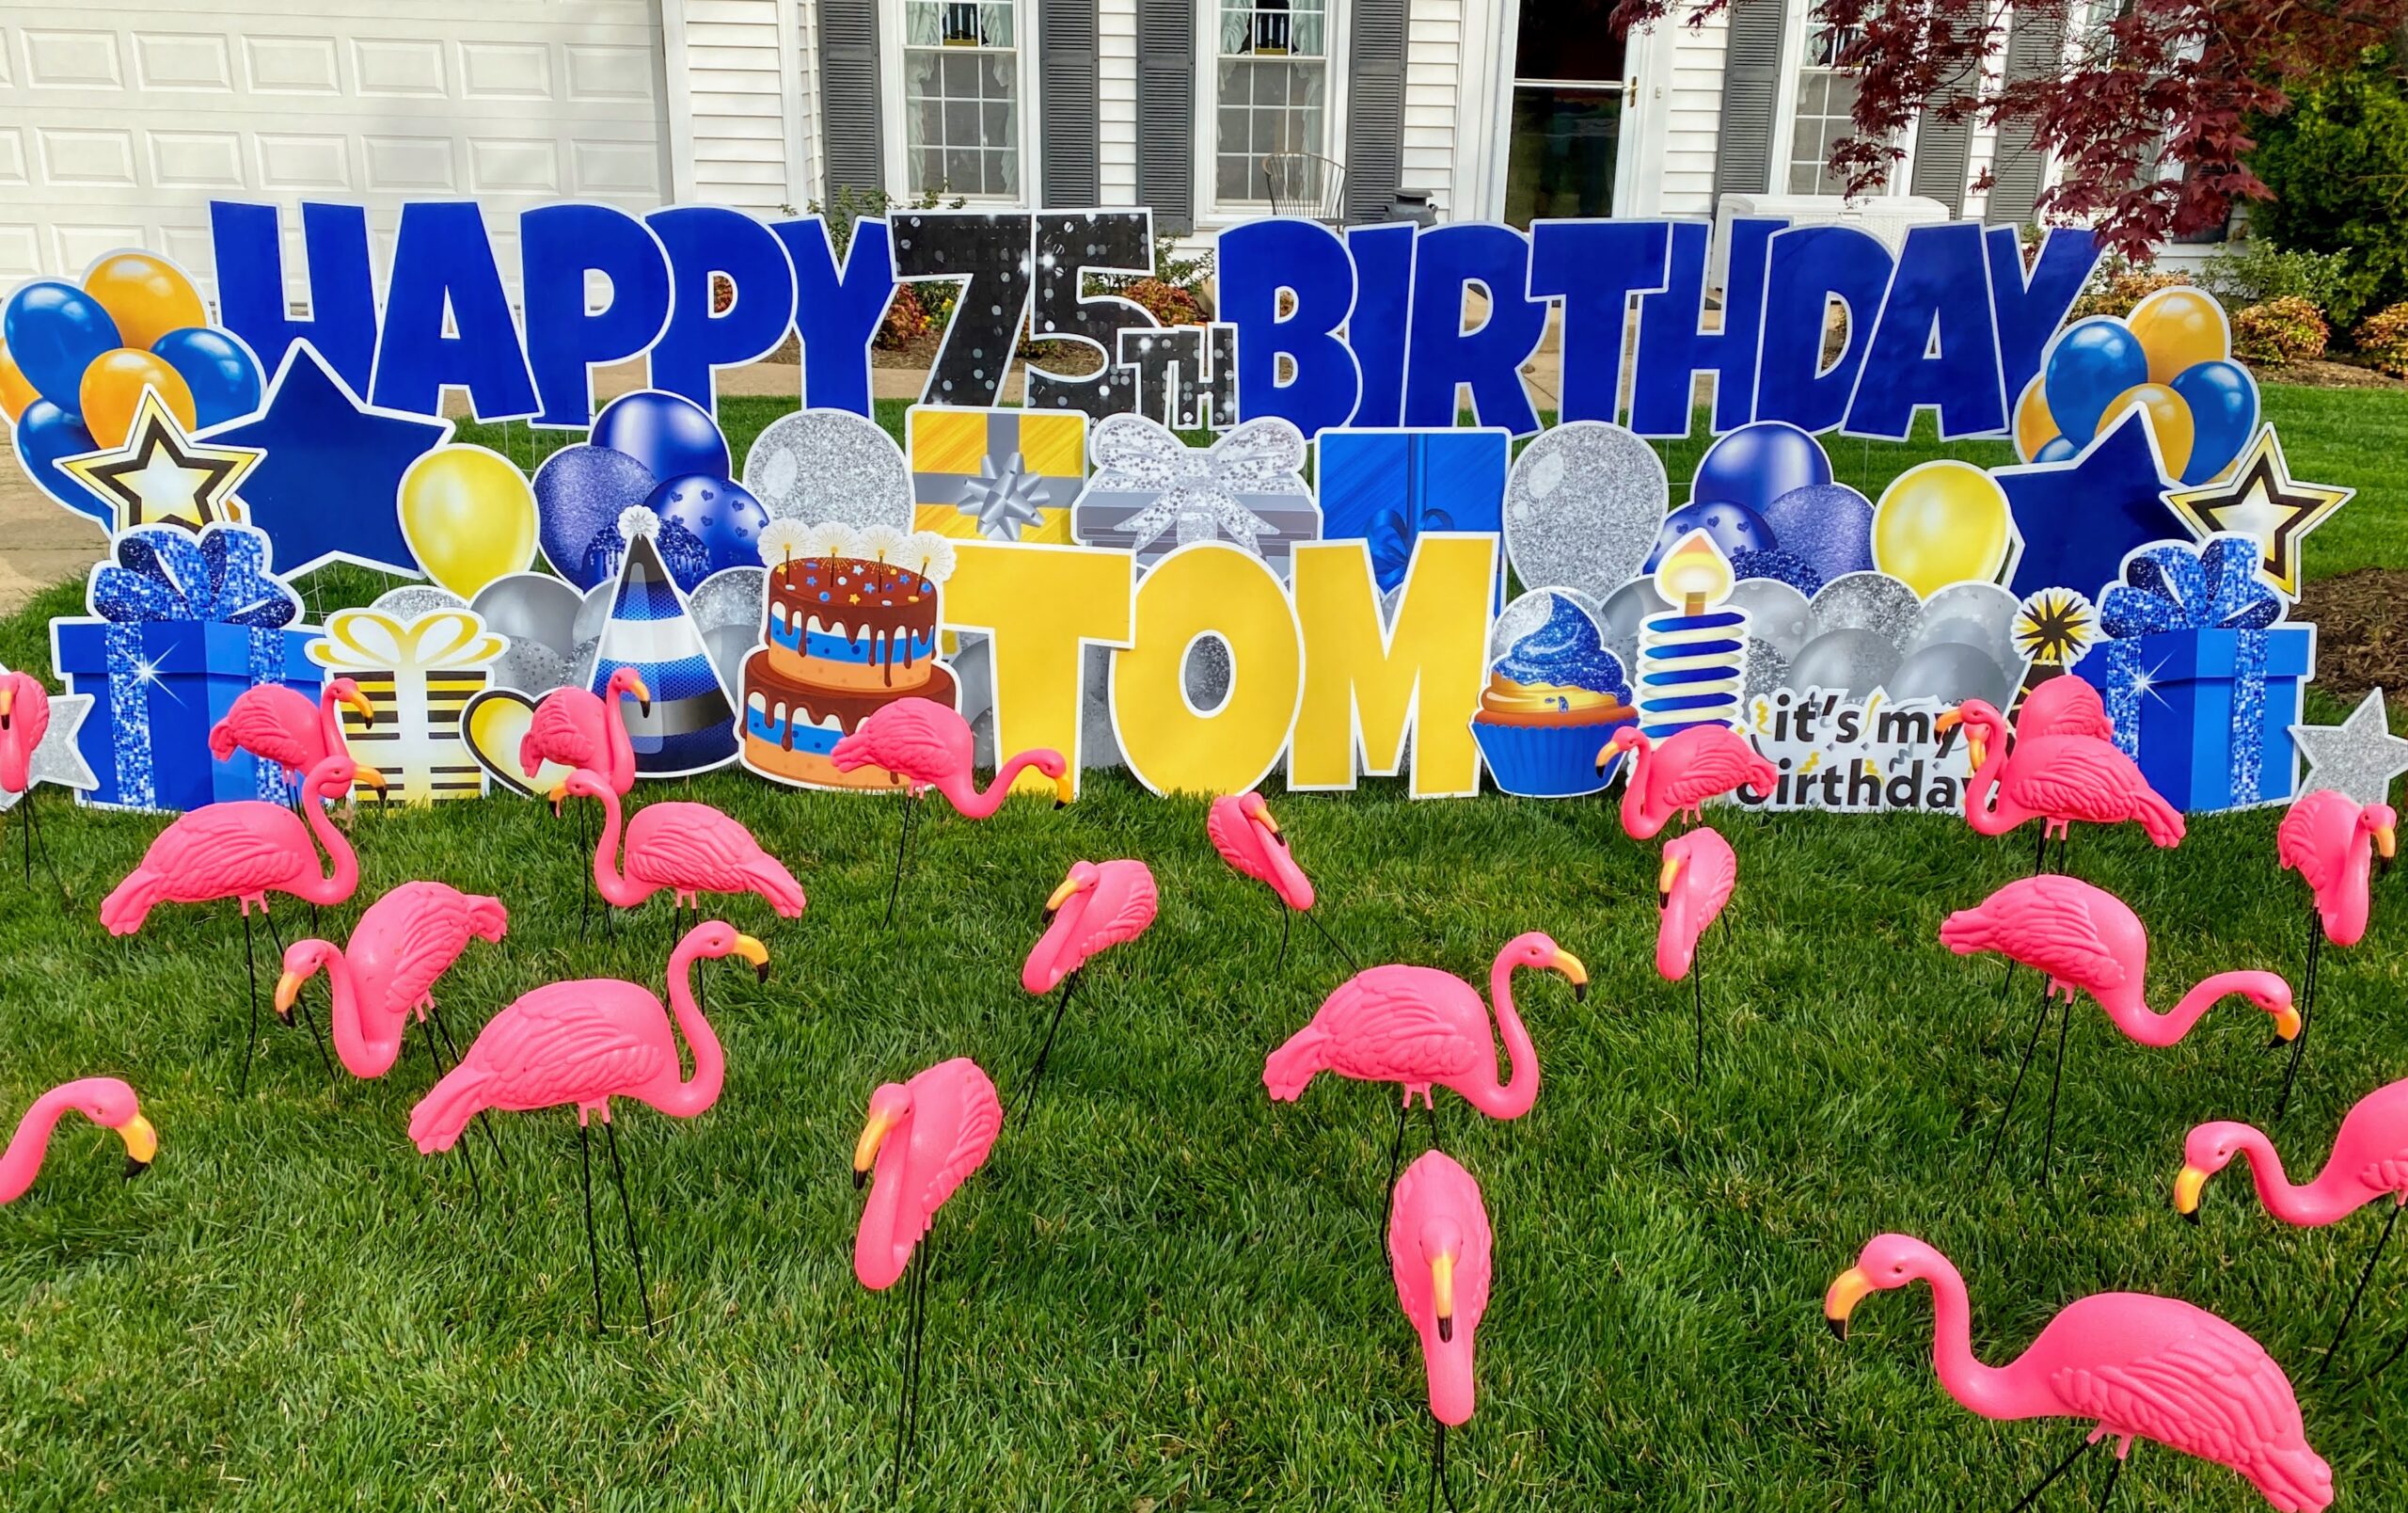 toms birthday yard sign flamingo flocking in springfield va